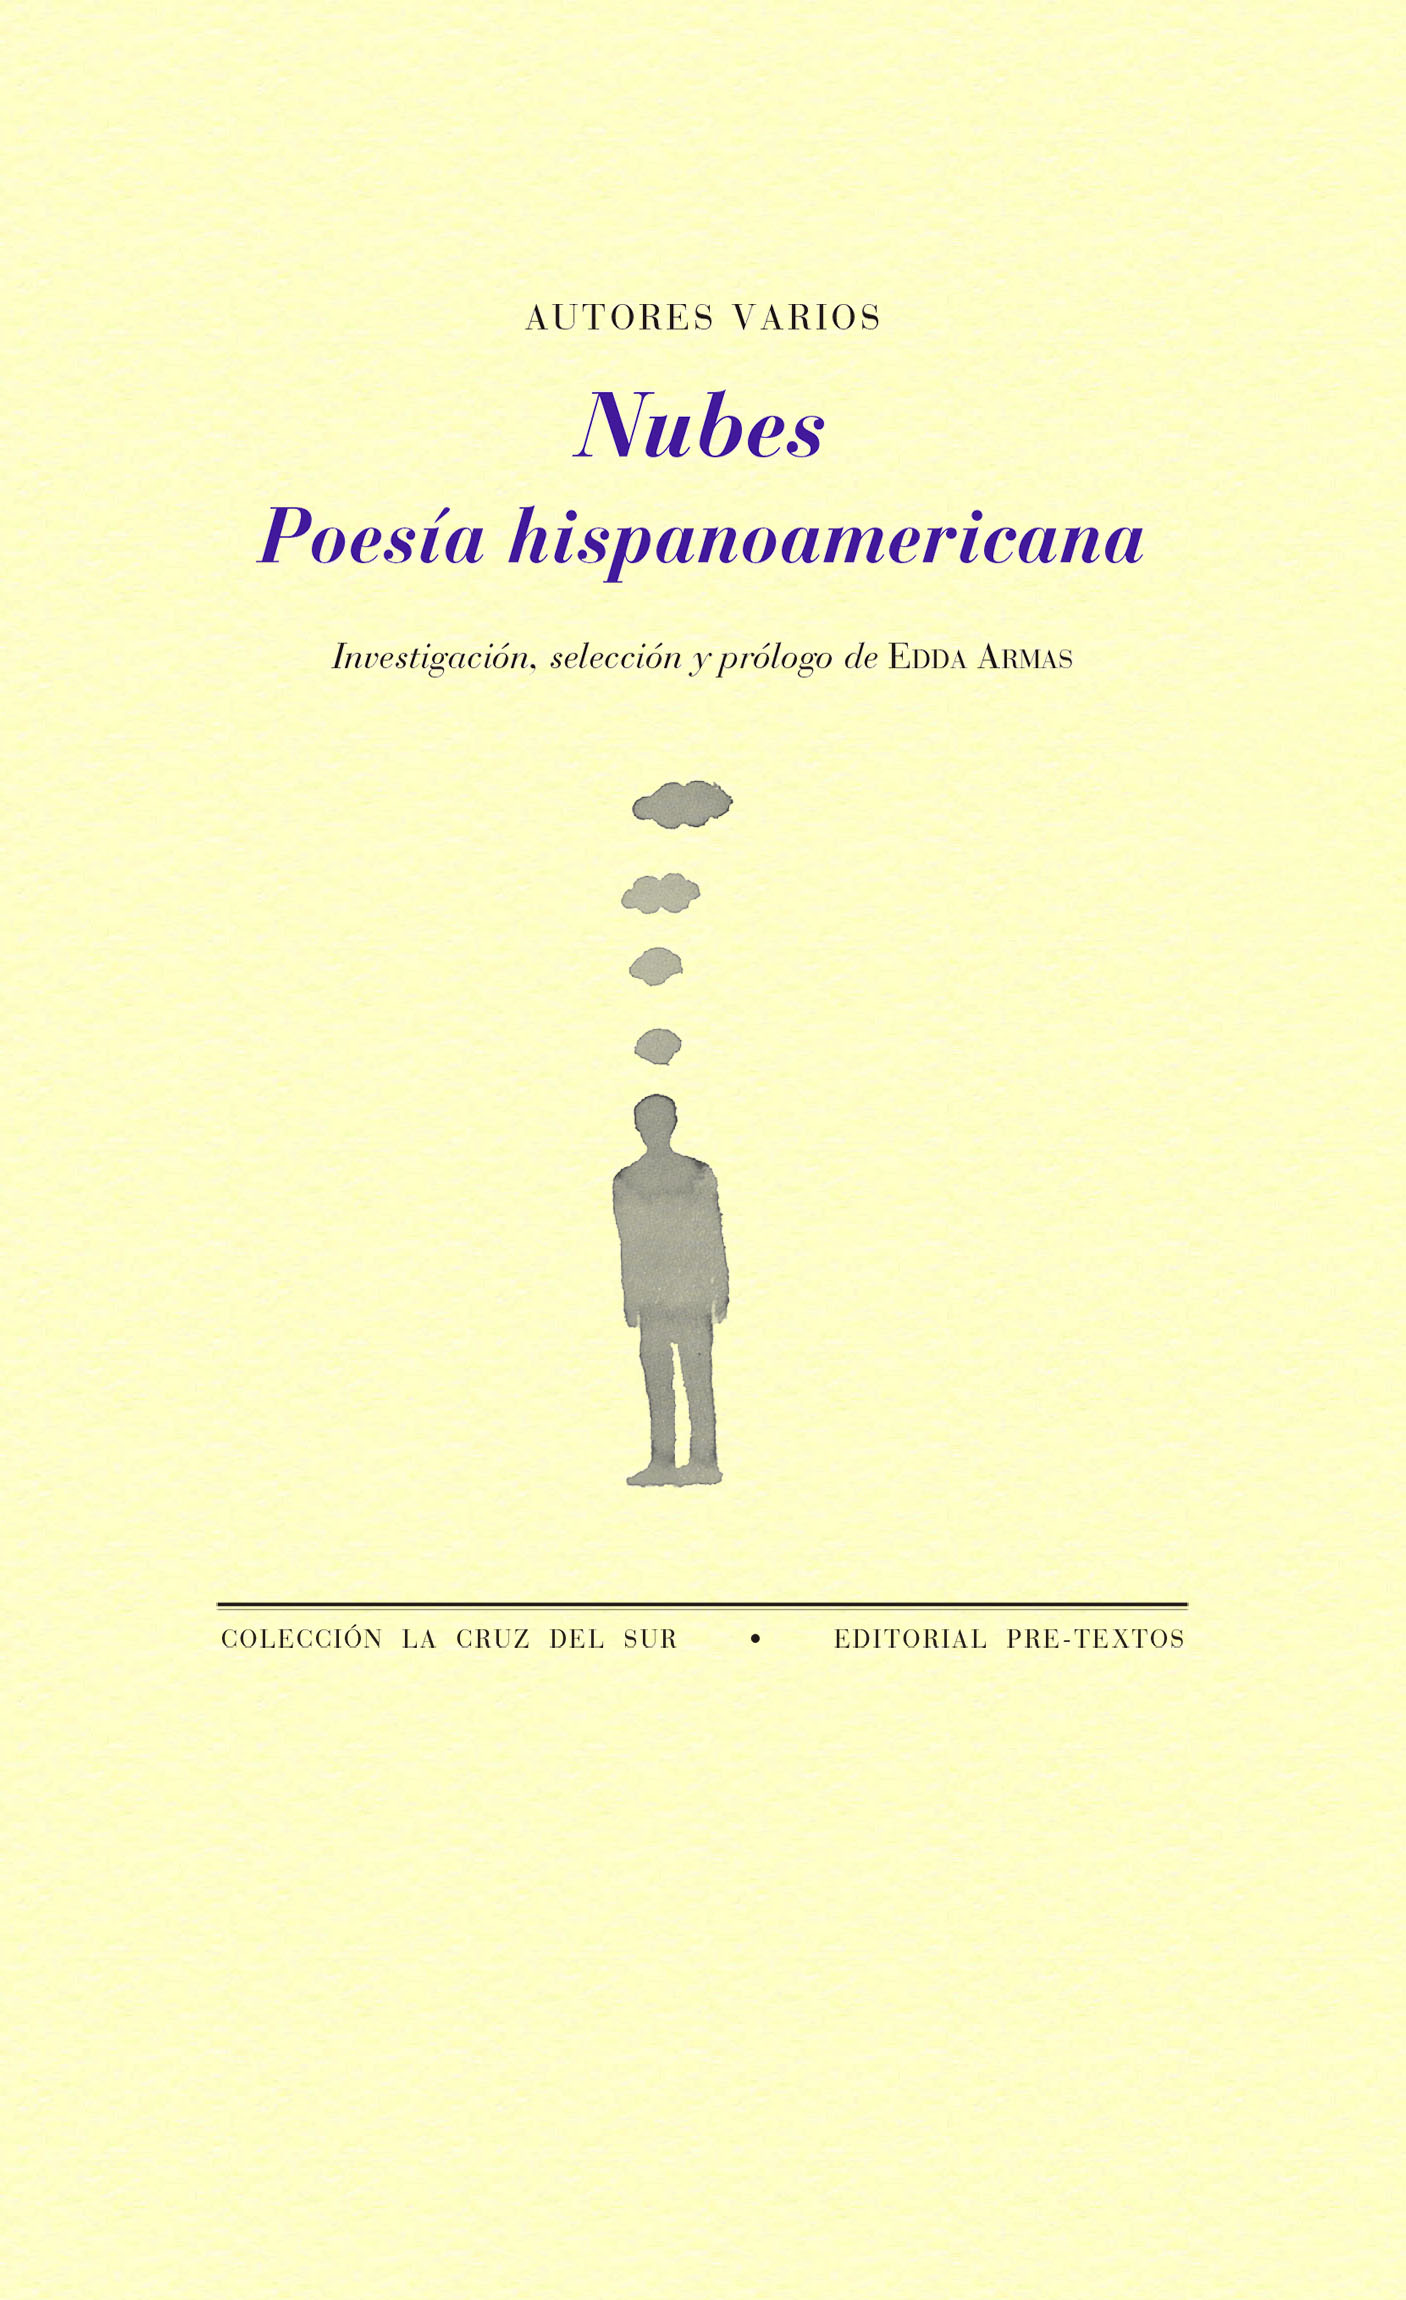 VV.AA. Nubes. Poesía hispanoamericana (Pre-Textos)